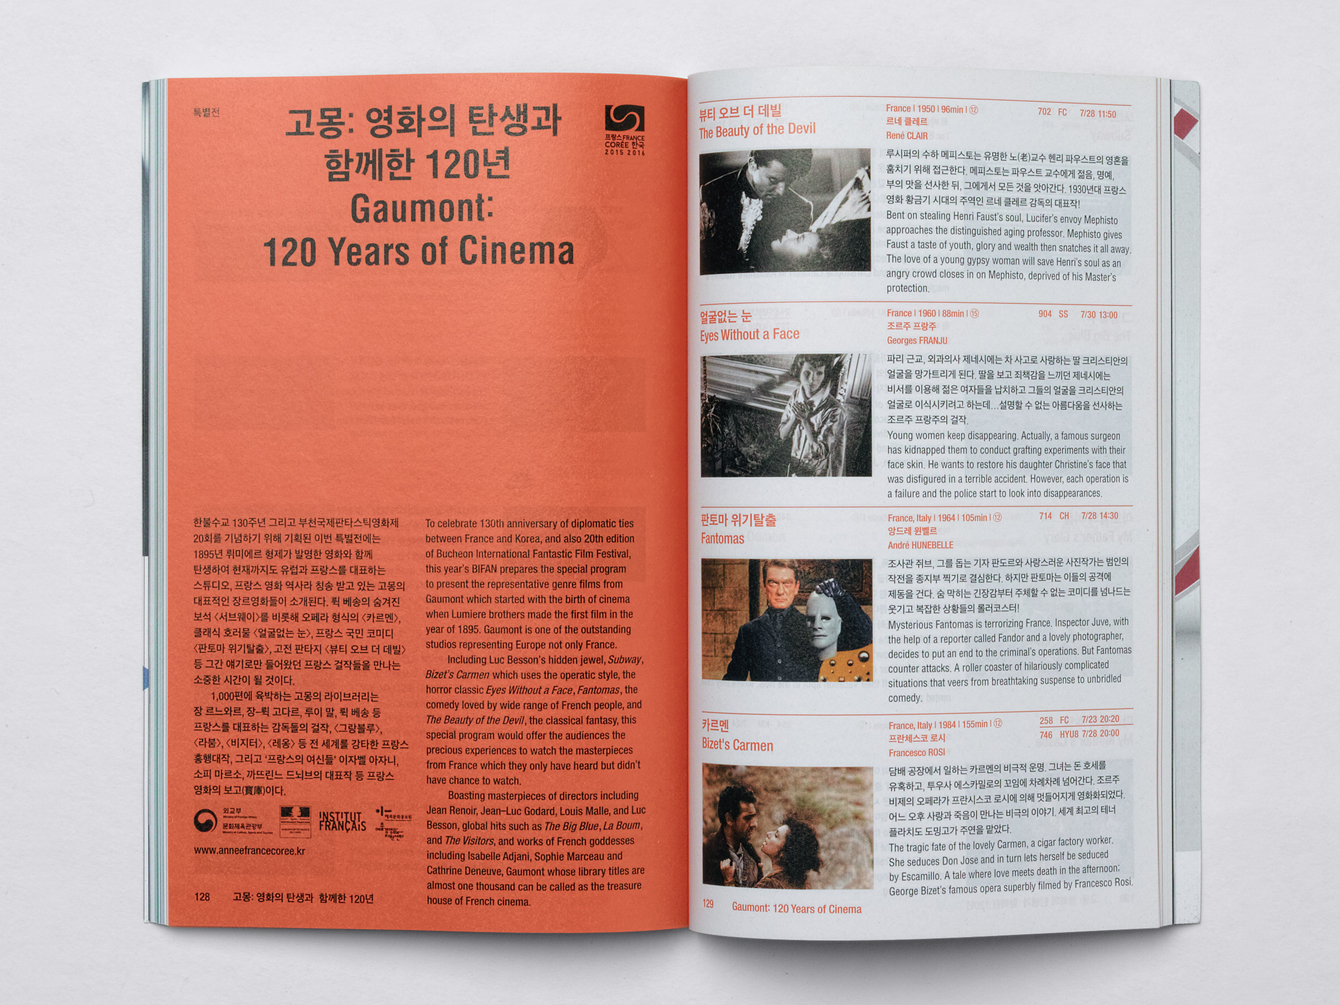 Brochure spread by Studio fnt for 20th Bucheon International Fantastic Film Festival, South Korea